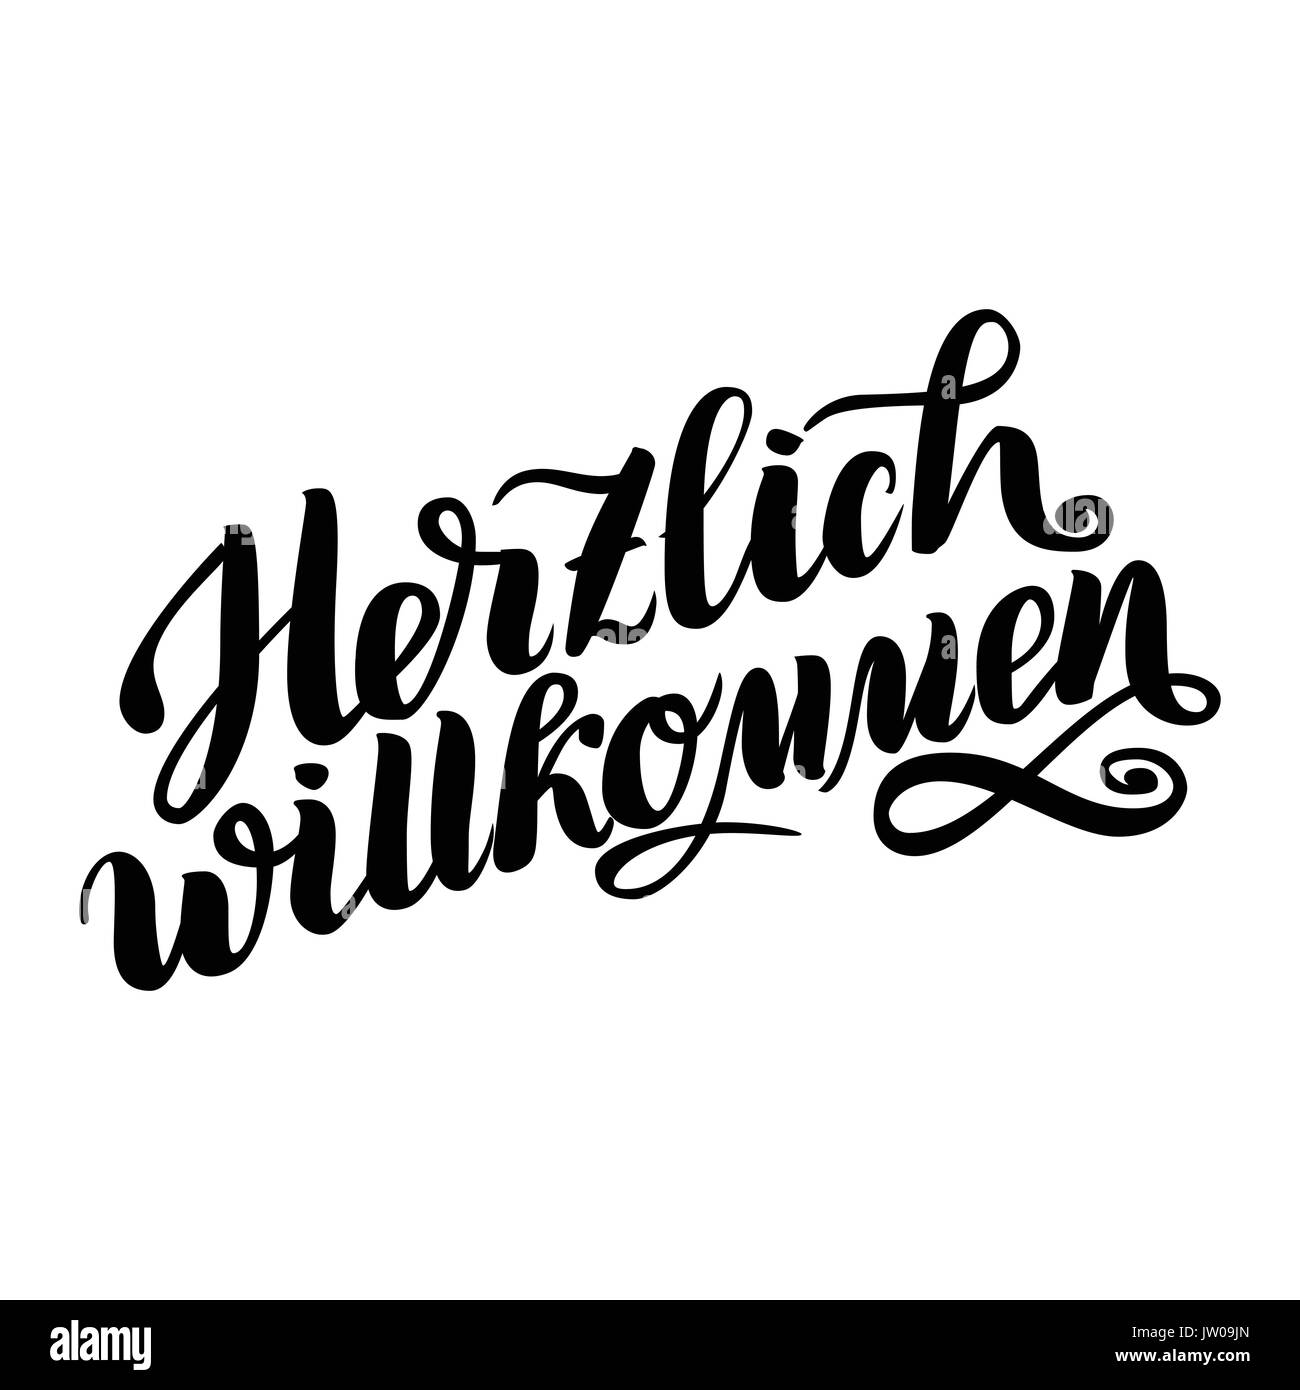 Herzlich willkommen. Welcome. Traditional German Oktoberfest bier festival . Vector hand-drawn brush lettering illustration isolated on white. Stock Vector